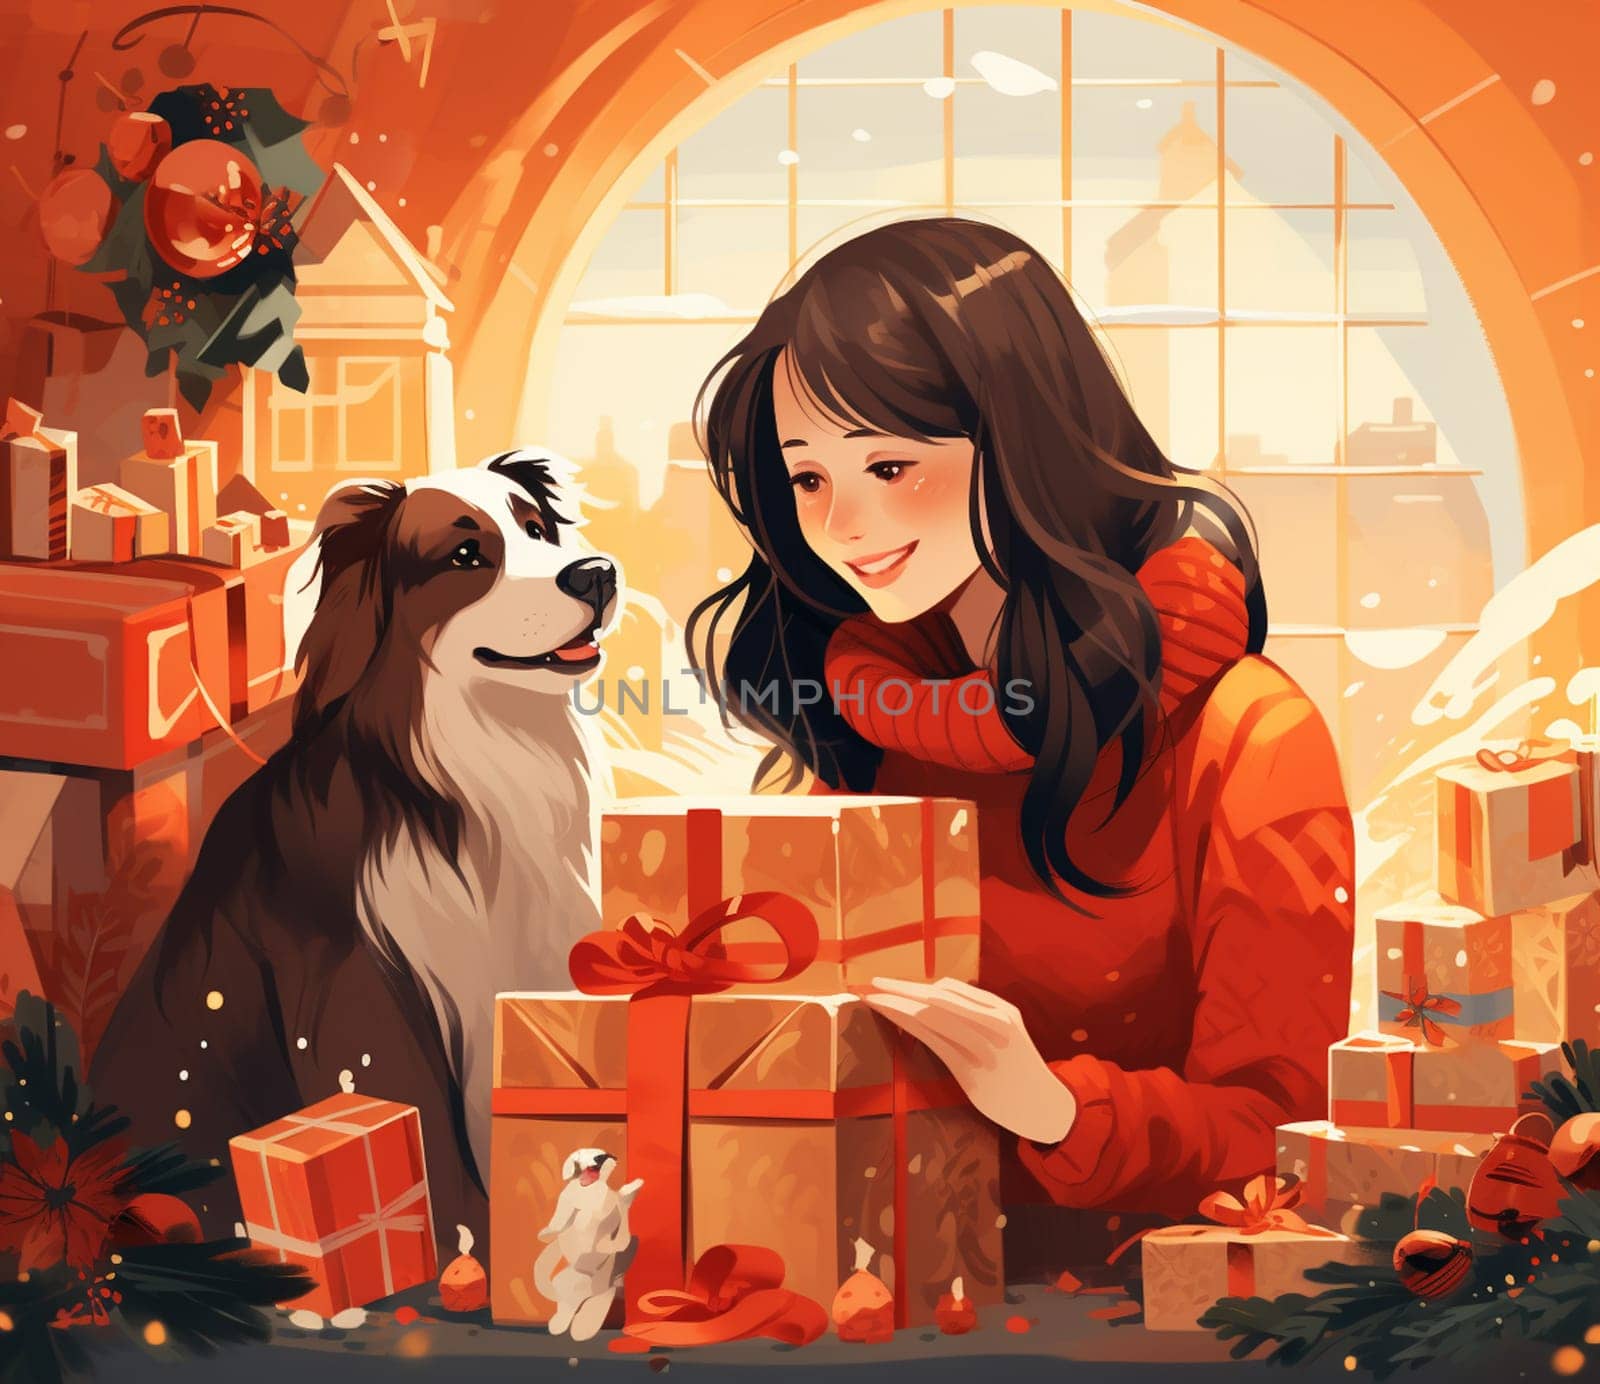 Funny girl with labrador dog and Christmas tree. Hand drawn Christmas illustration by Andelov13